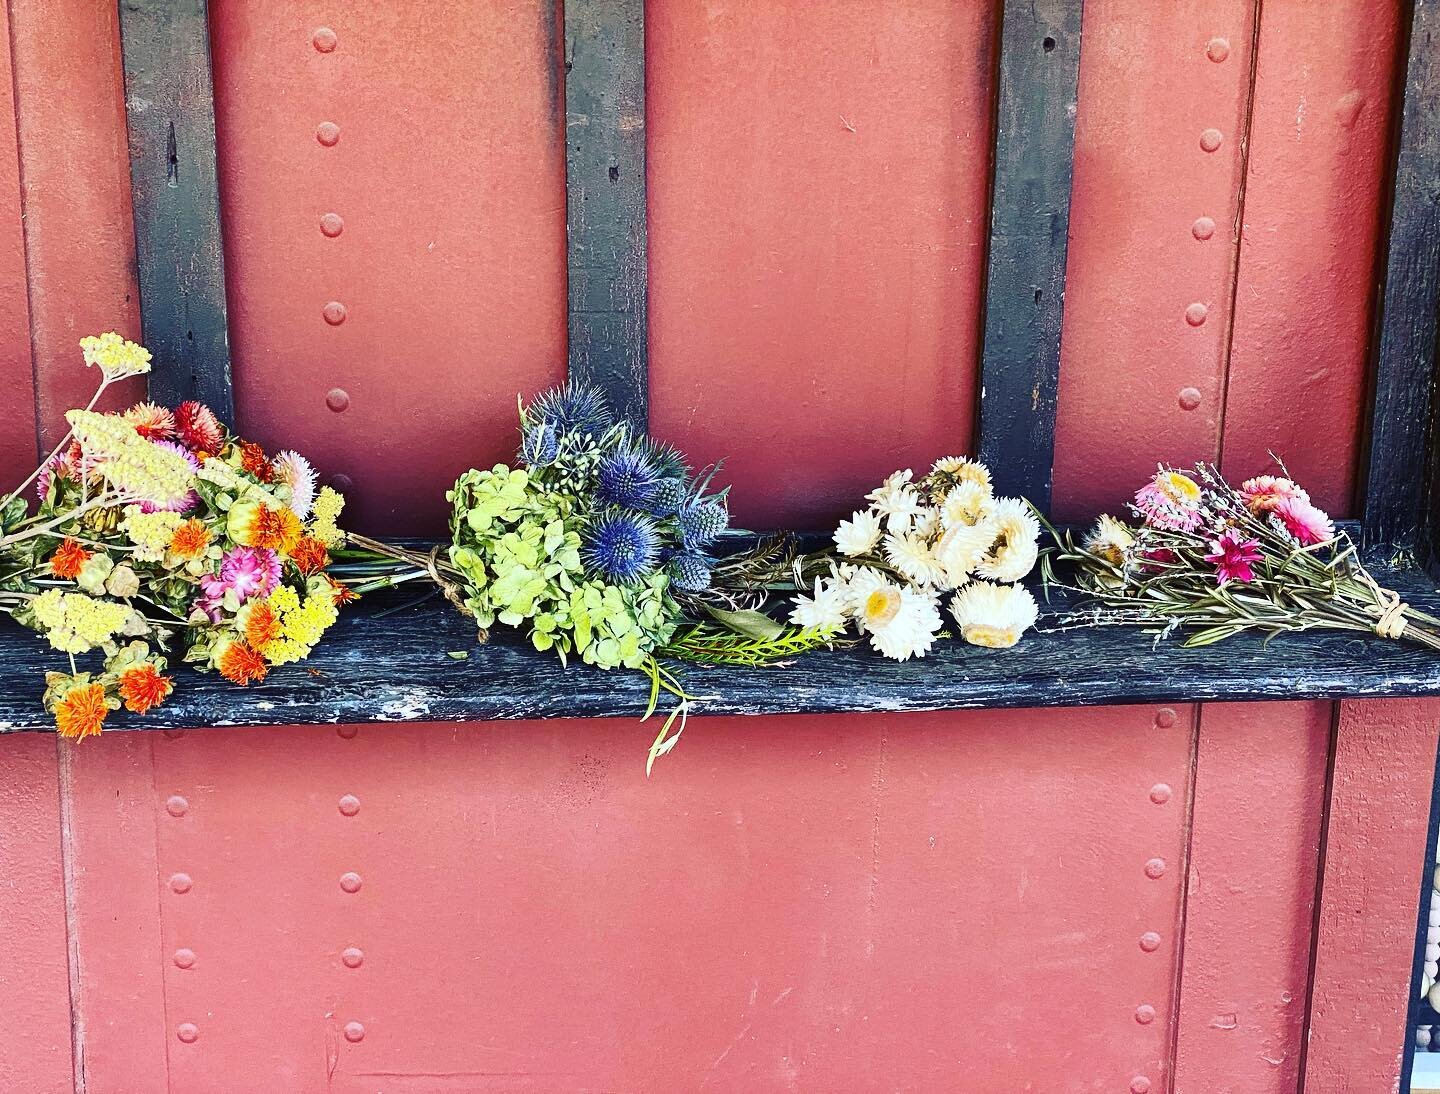 Some of our petit dried flower bouquets 🌸🌼🌸#perfectlittlegift #bloomingaylesgarden #millvalleylumberyard